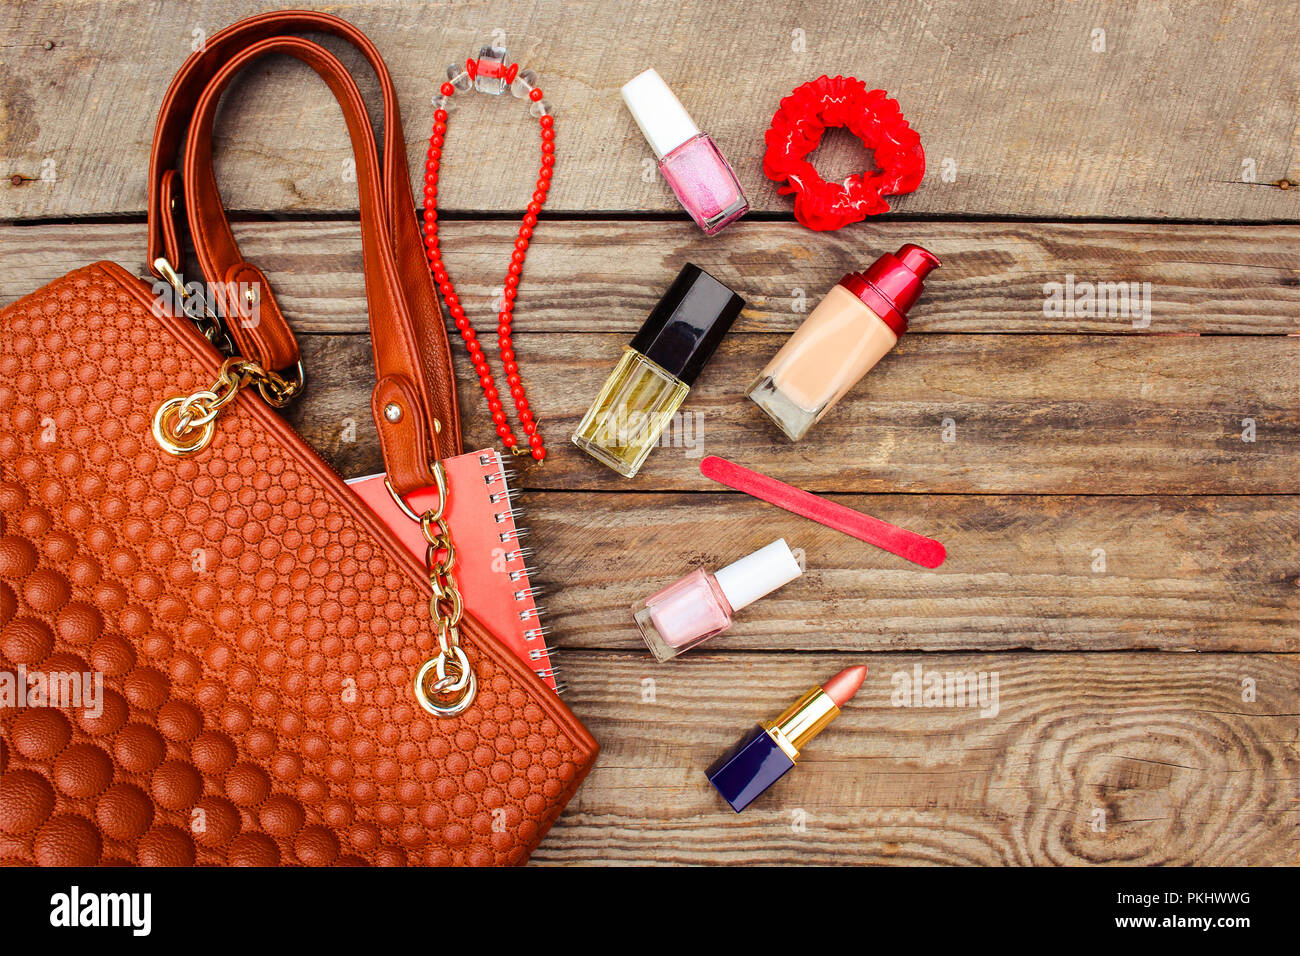 Amazon.in : lady purse | Women handbags, Stylish handbag, Wallets for women